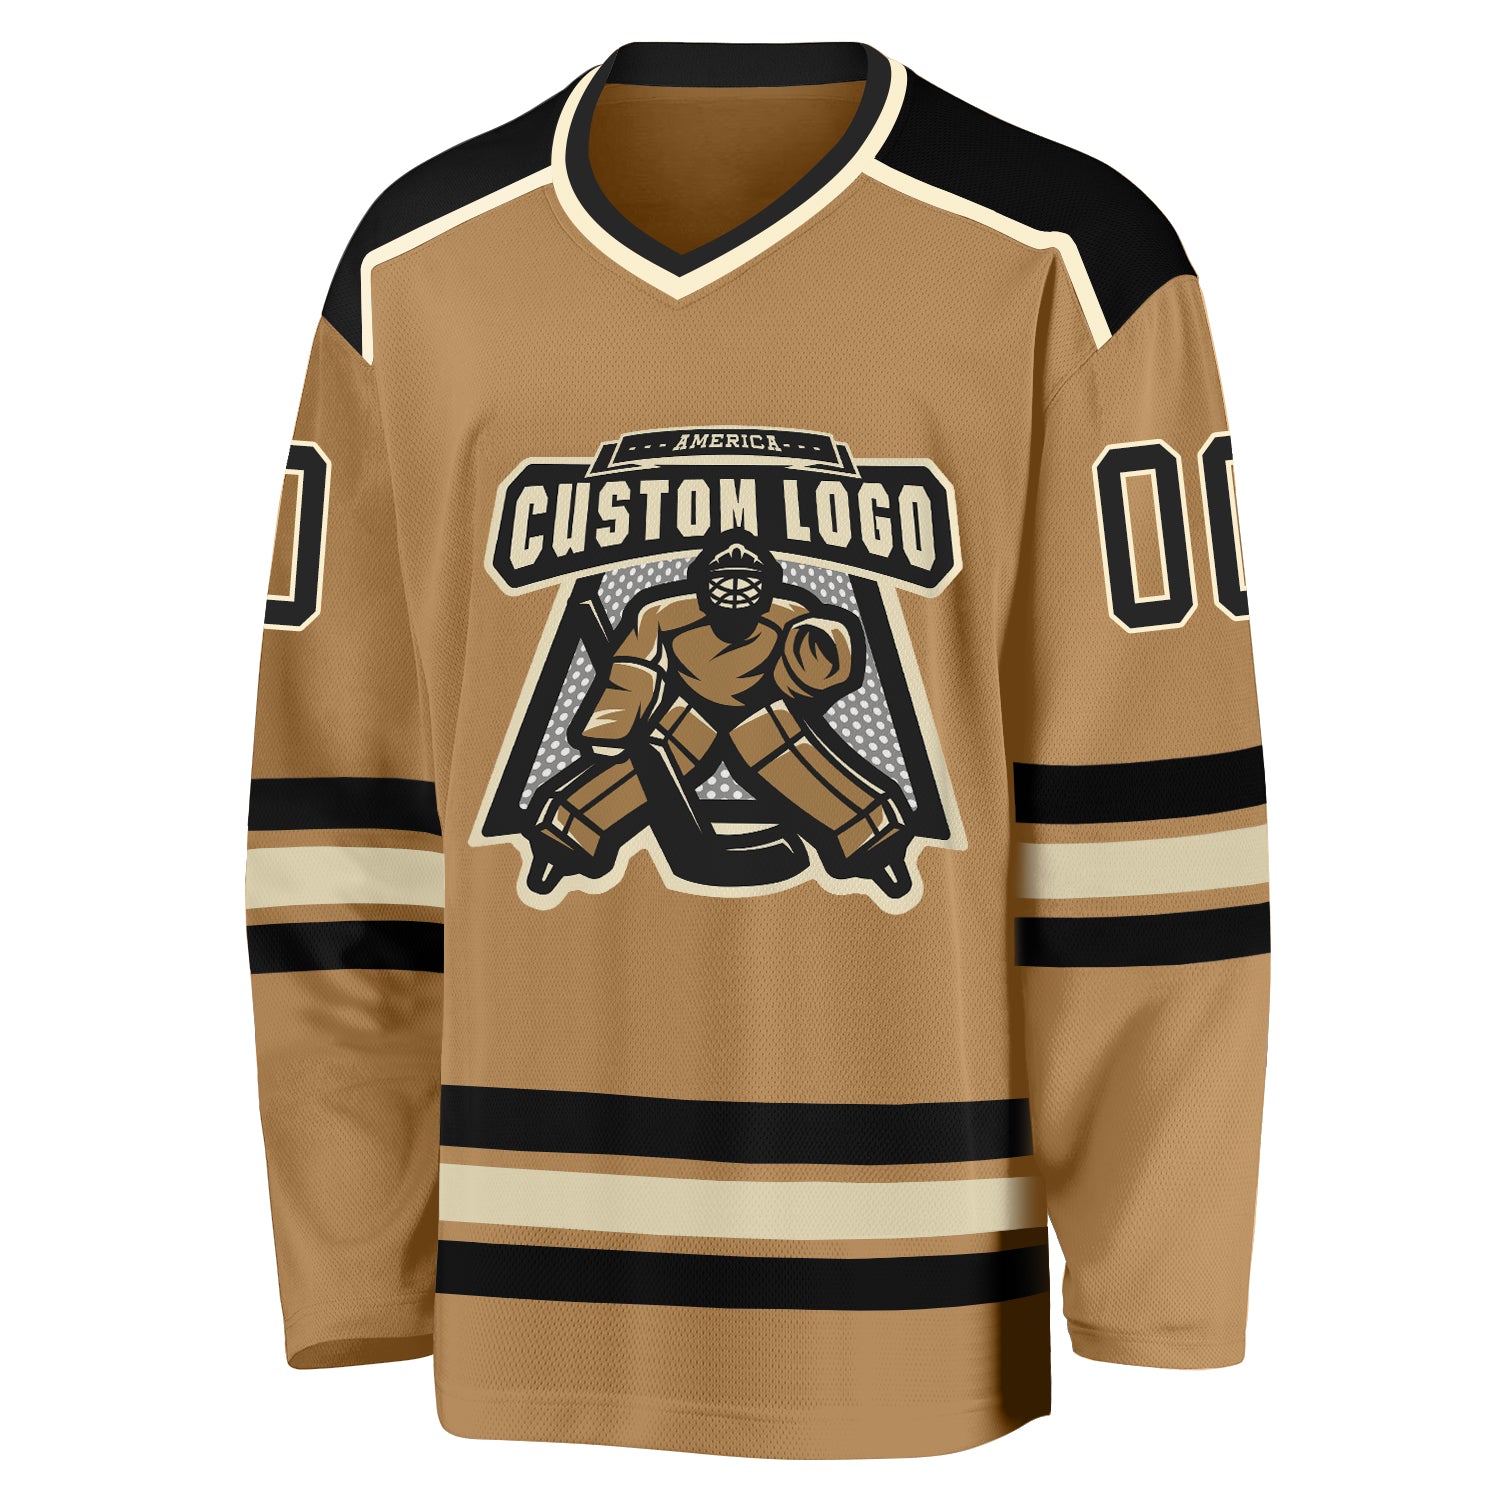 Personalized St. Patrick's Day Boston Bruins hockey jersey